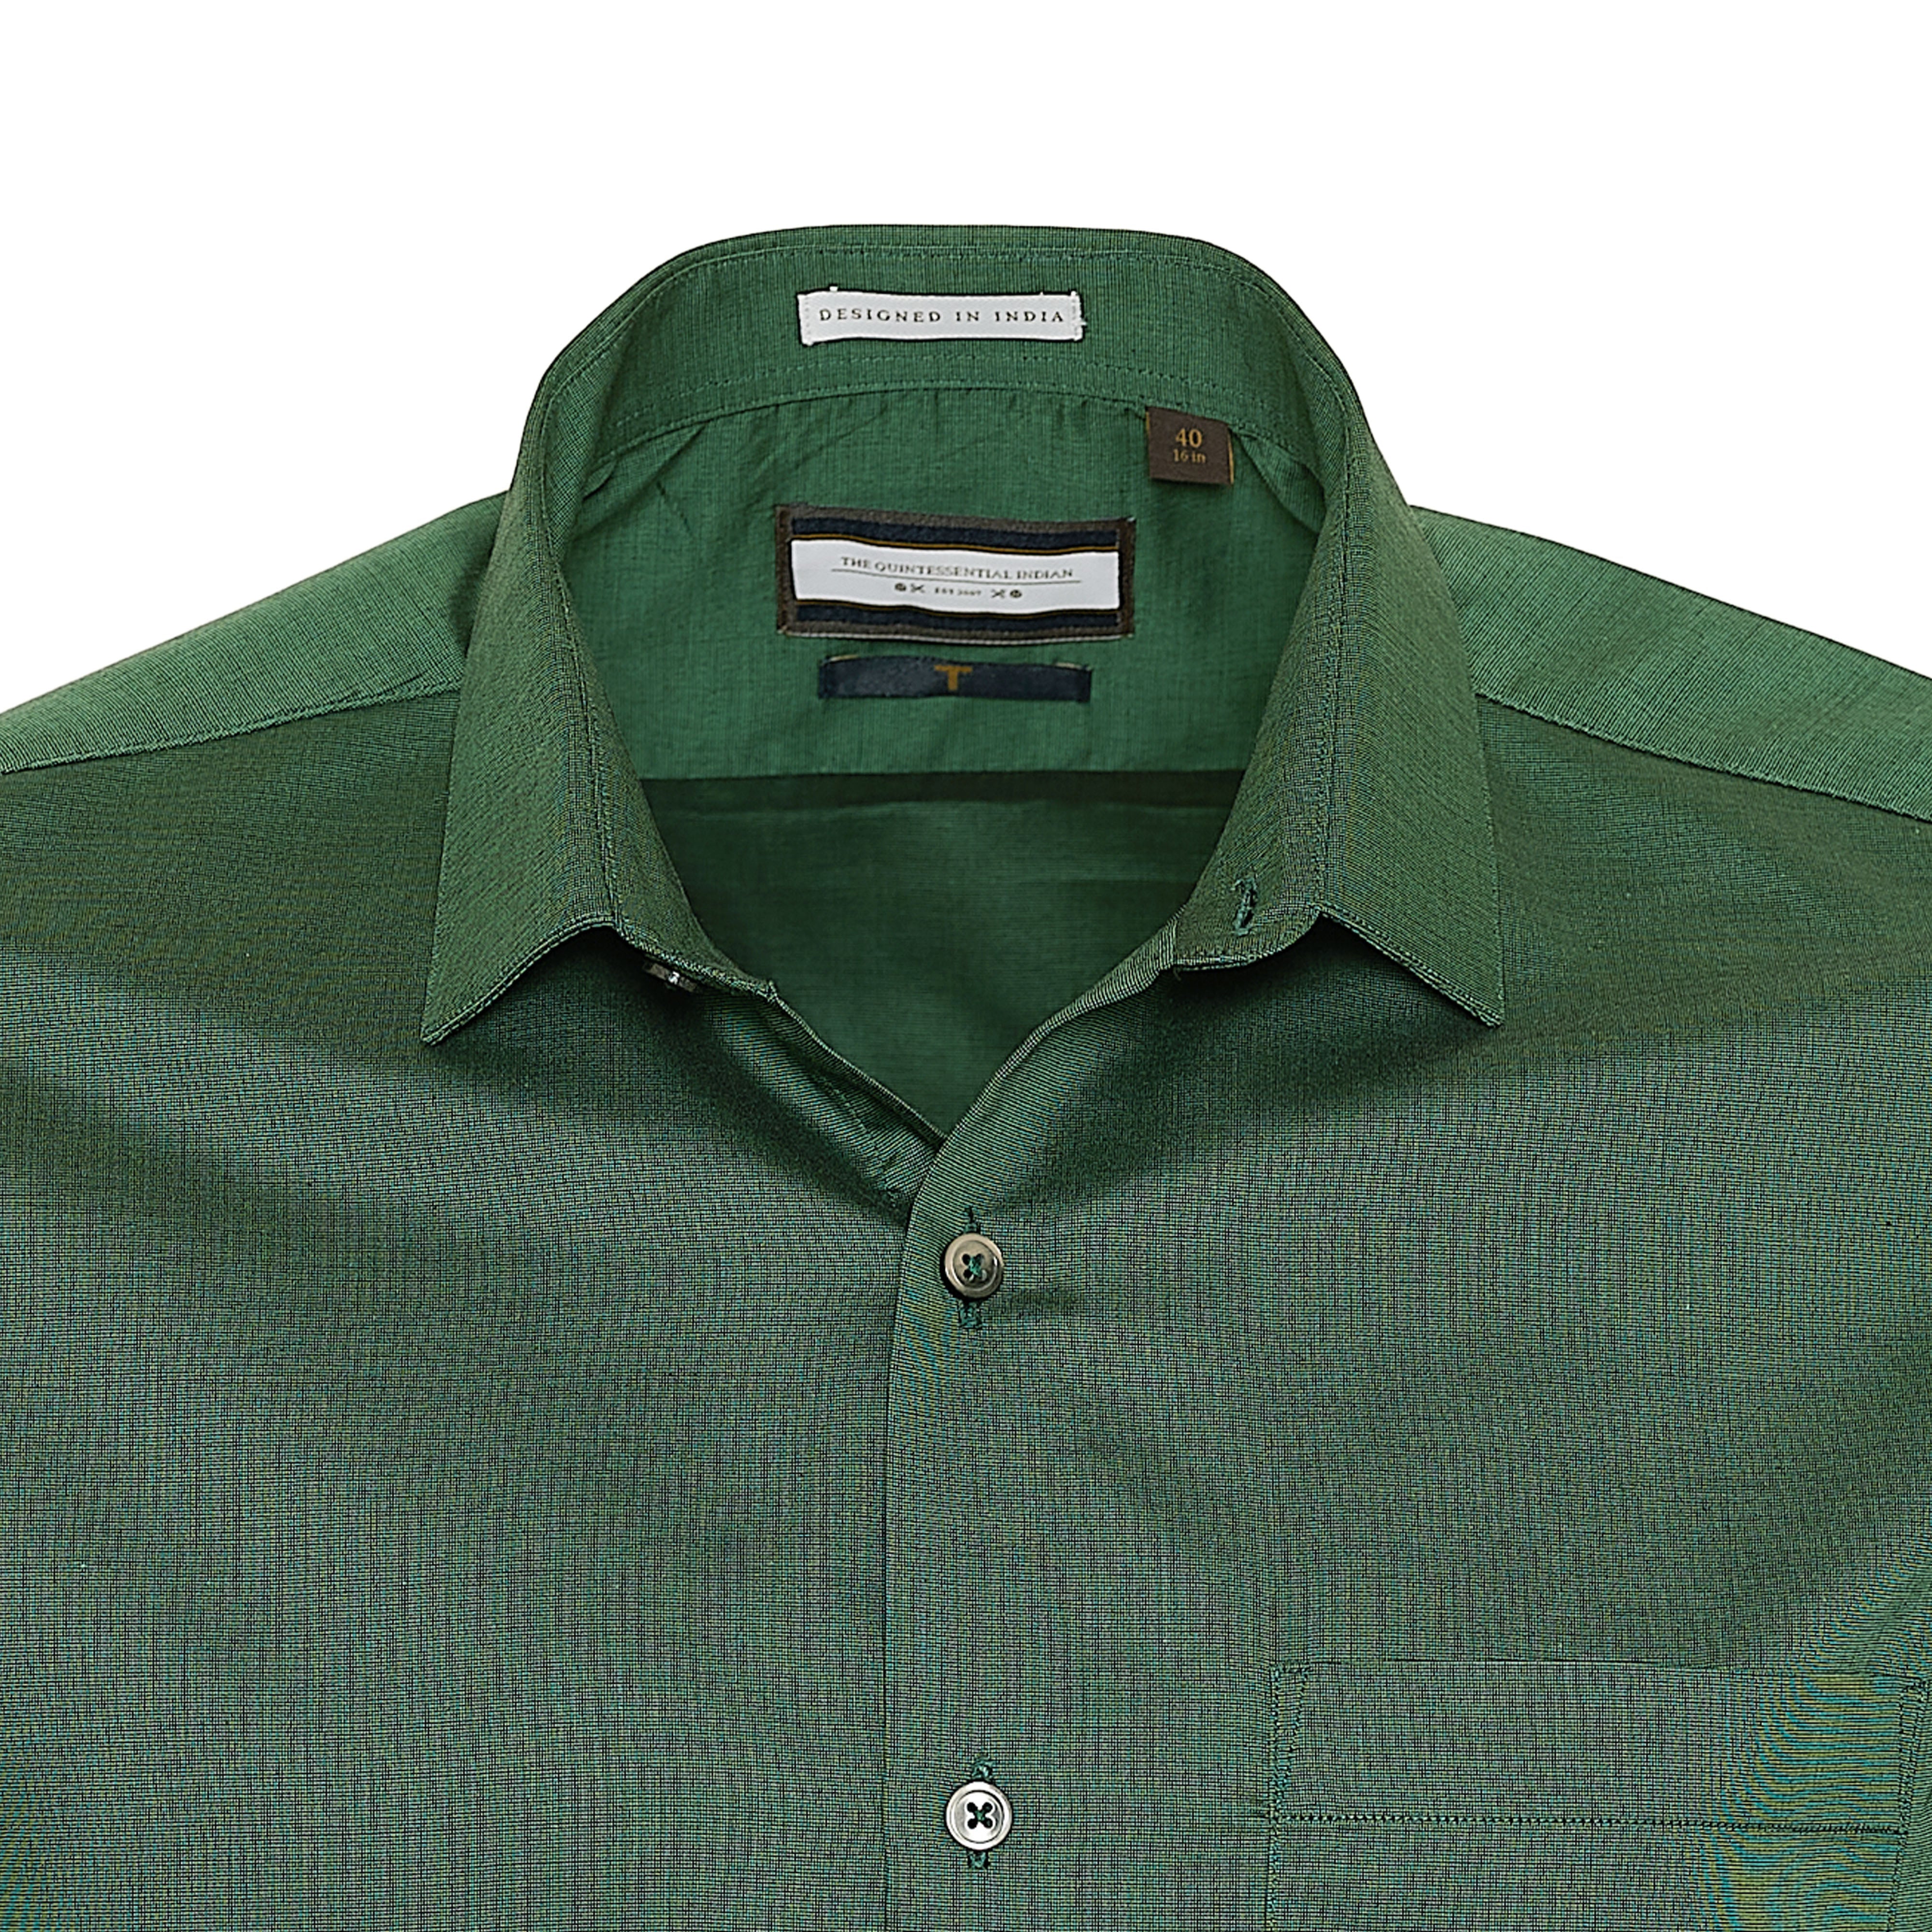 Superfine Supima Cotton, Dark Green Full-sleeved shirt